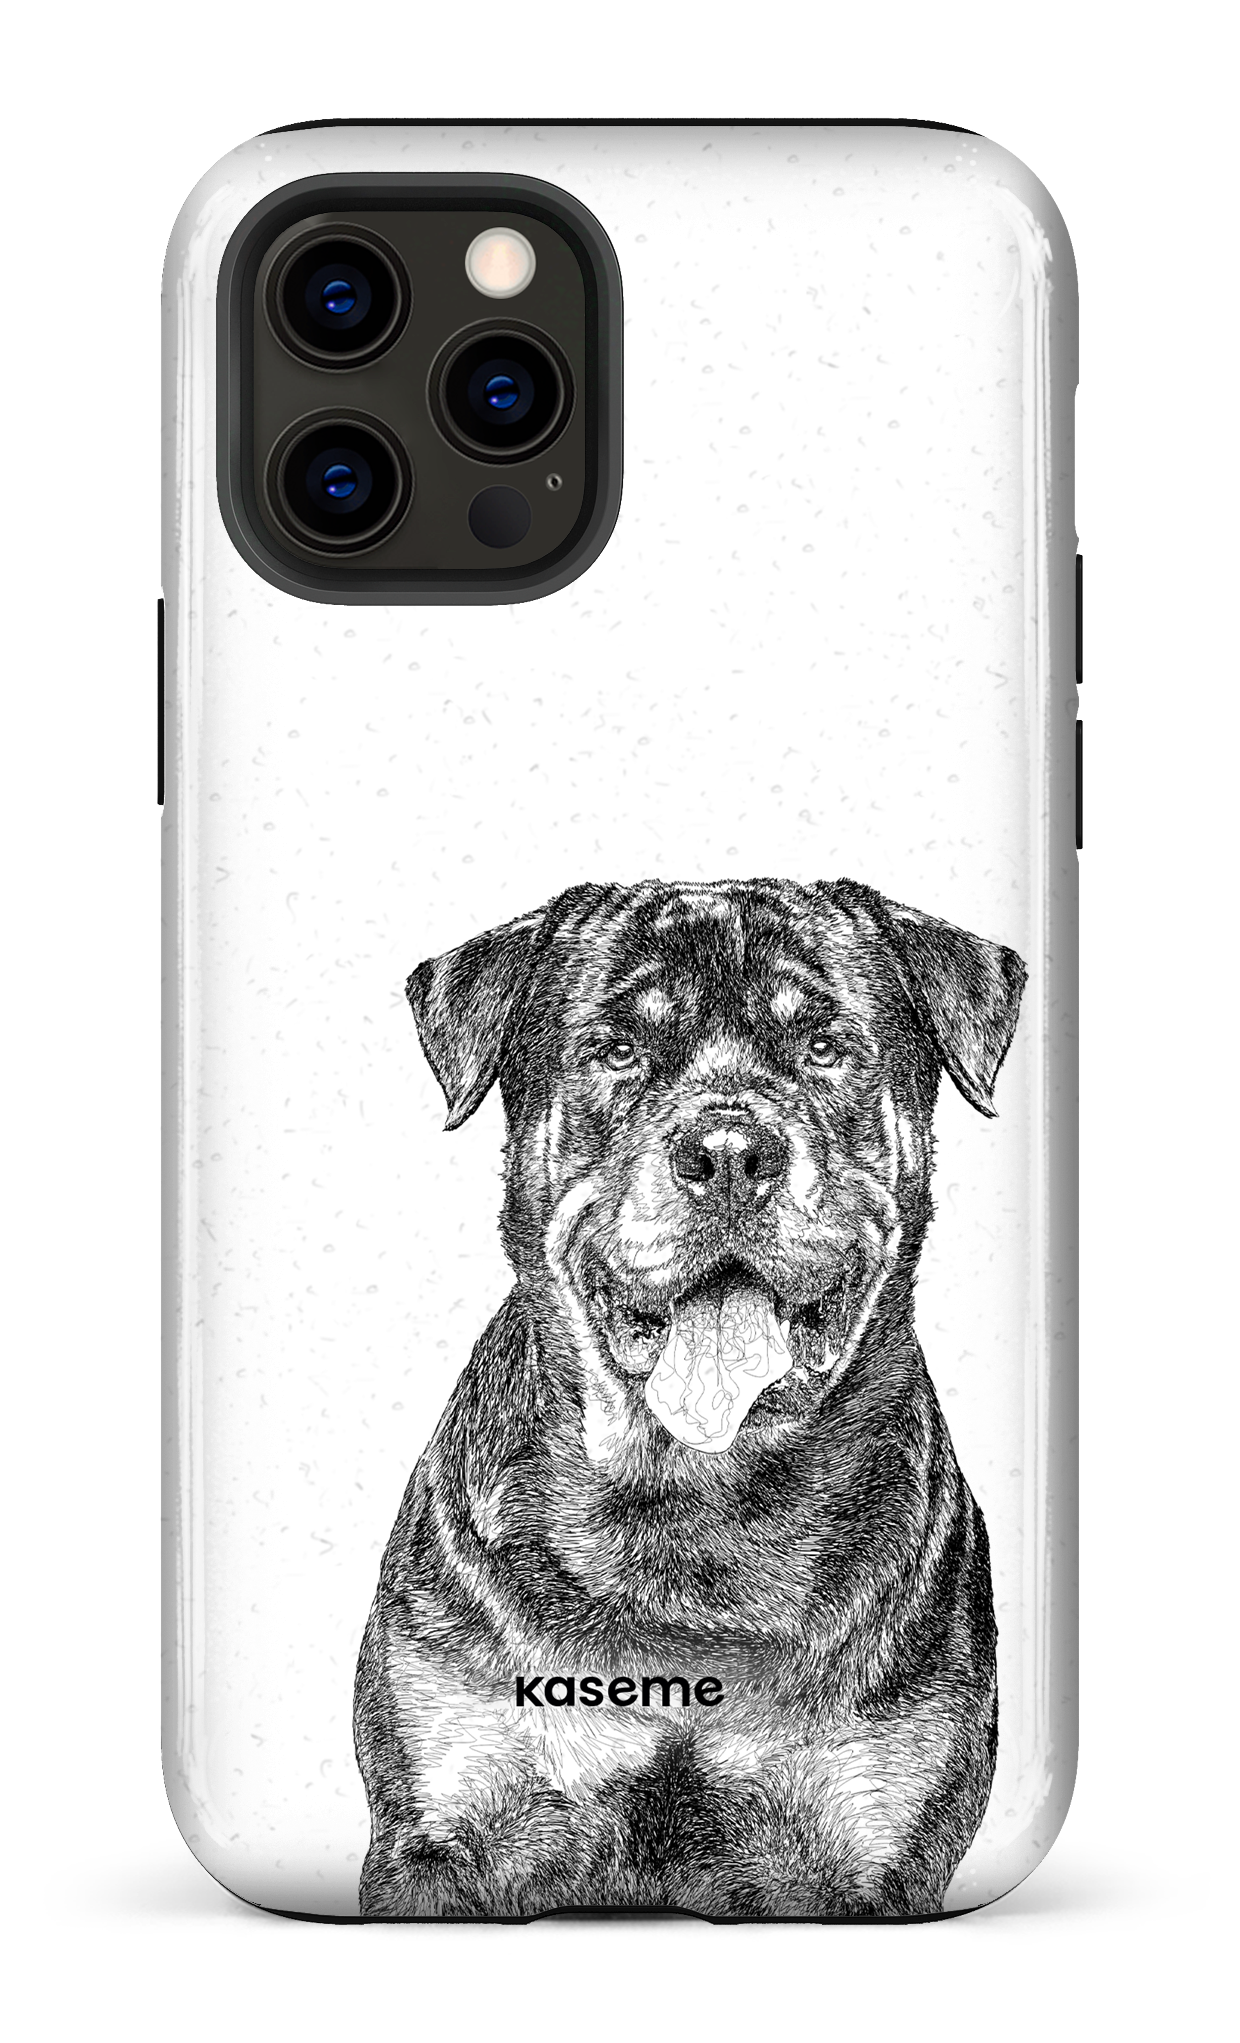 Rottweiler - iPhone 12 Pro